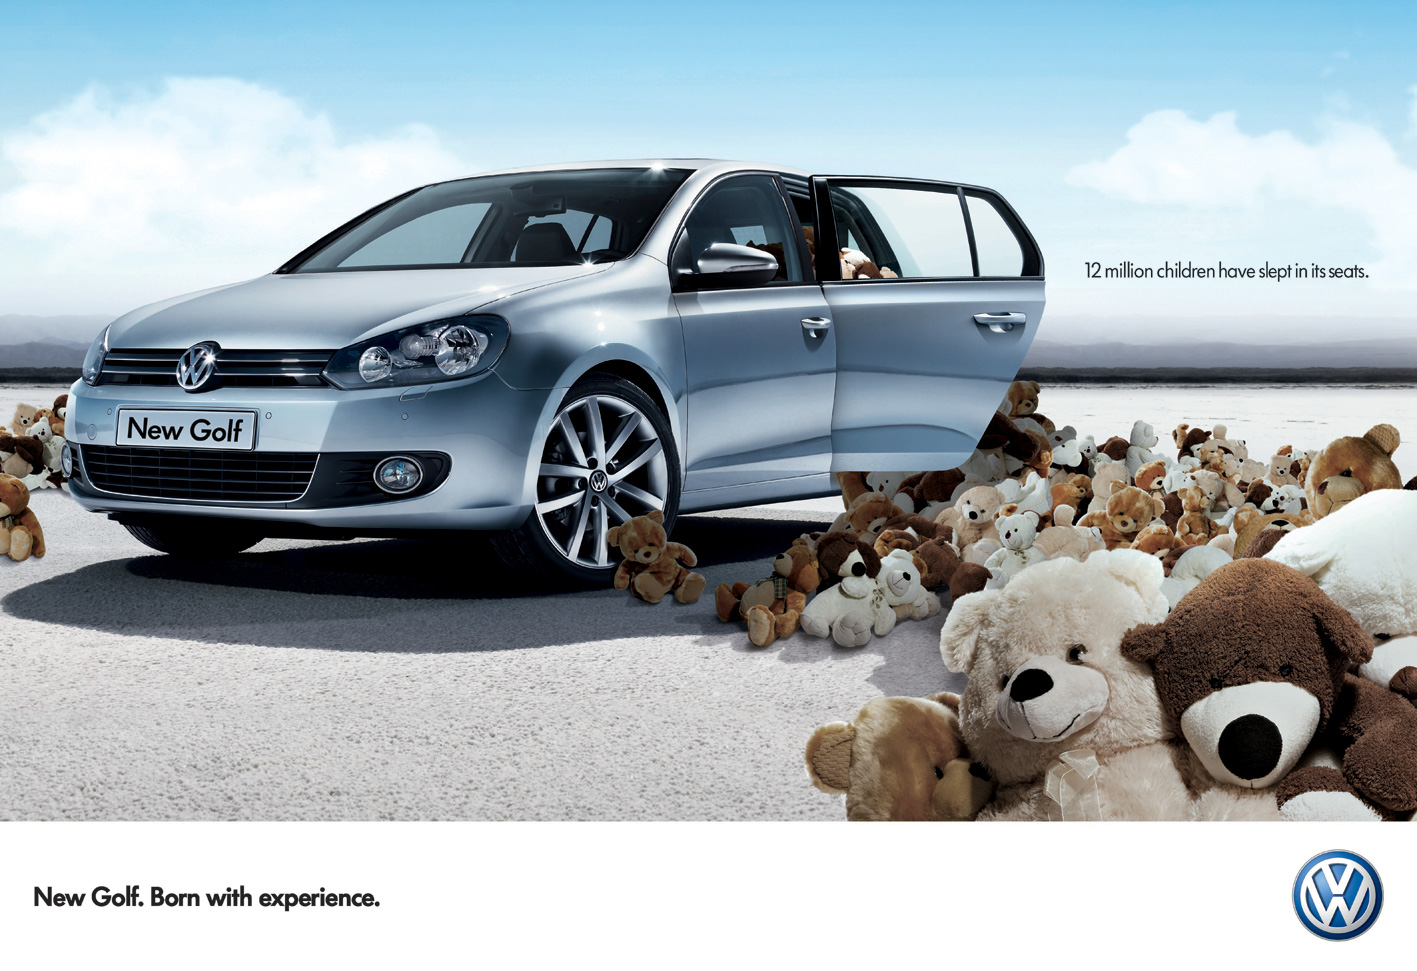 Страшная реклама авто. Реклама автомобиля. Реклама Volkswagen. Реклама автомобиля Фольксваген. Реклама на машине.